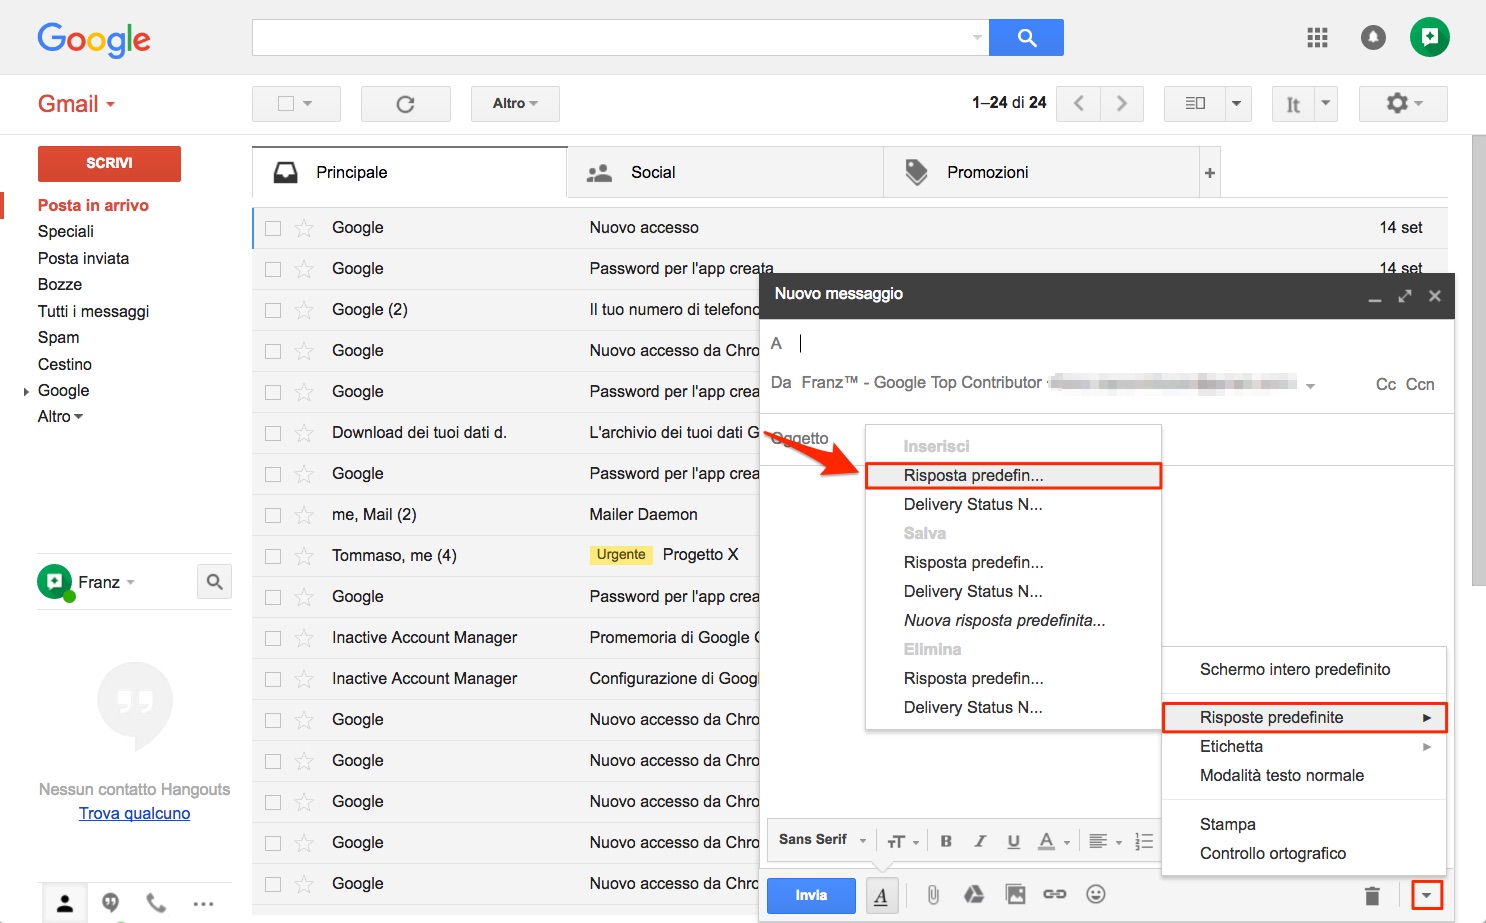 Modelli risposte predefinite in Gmail